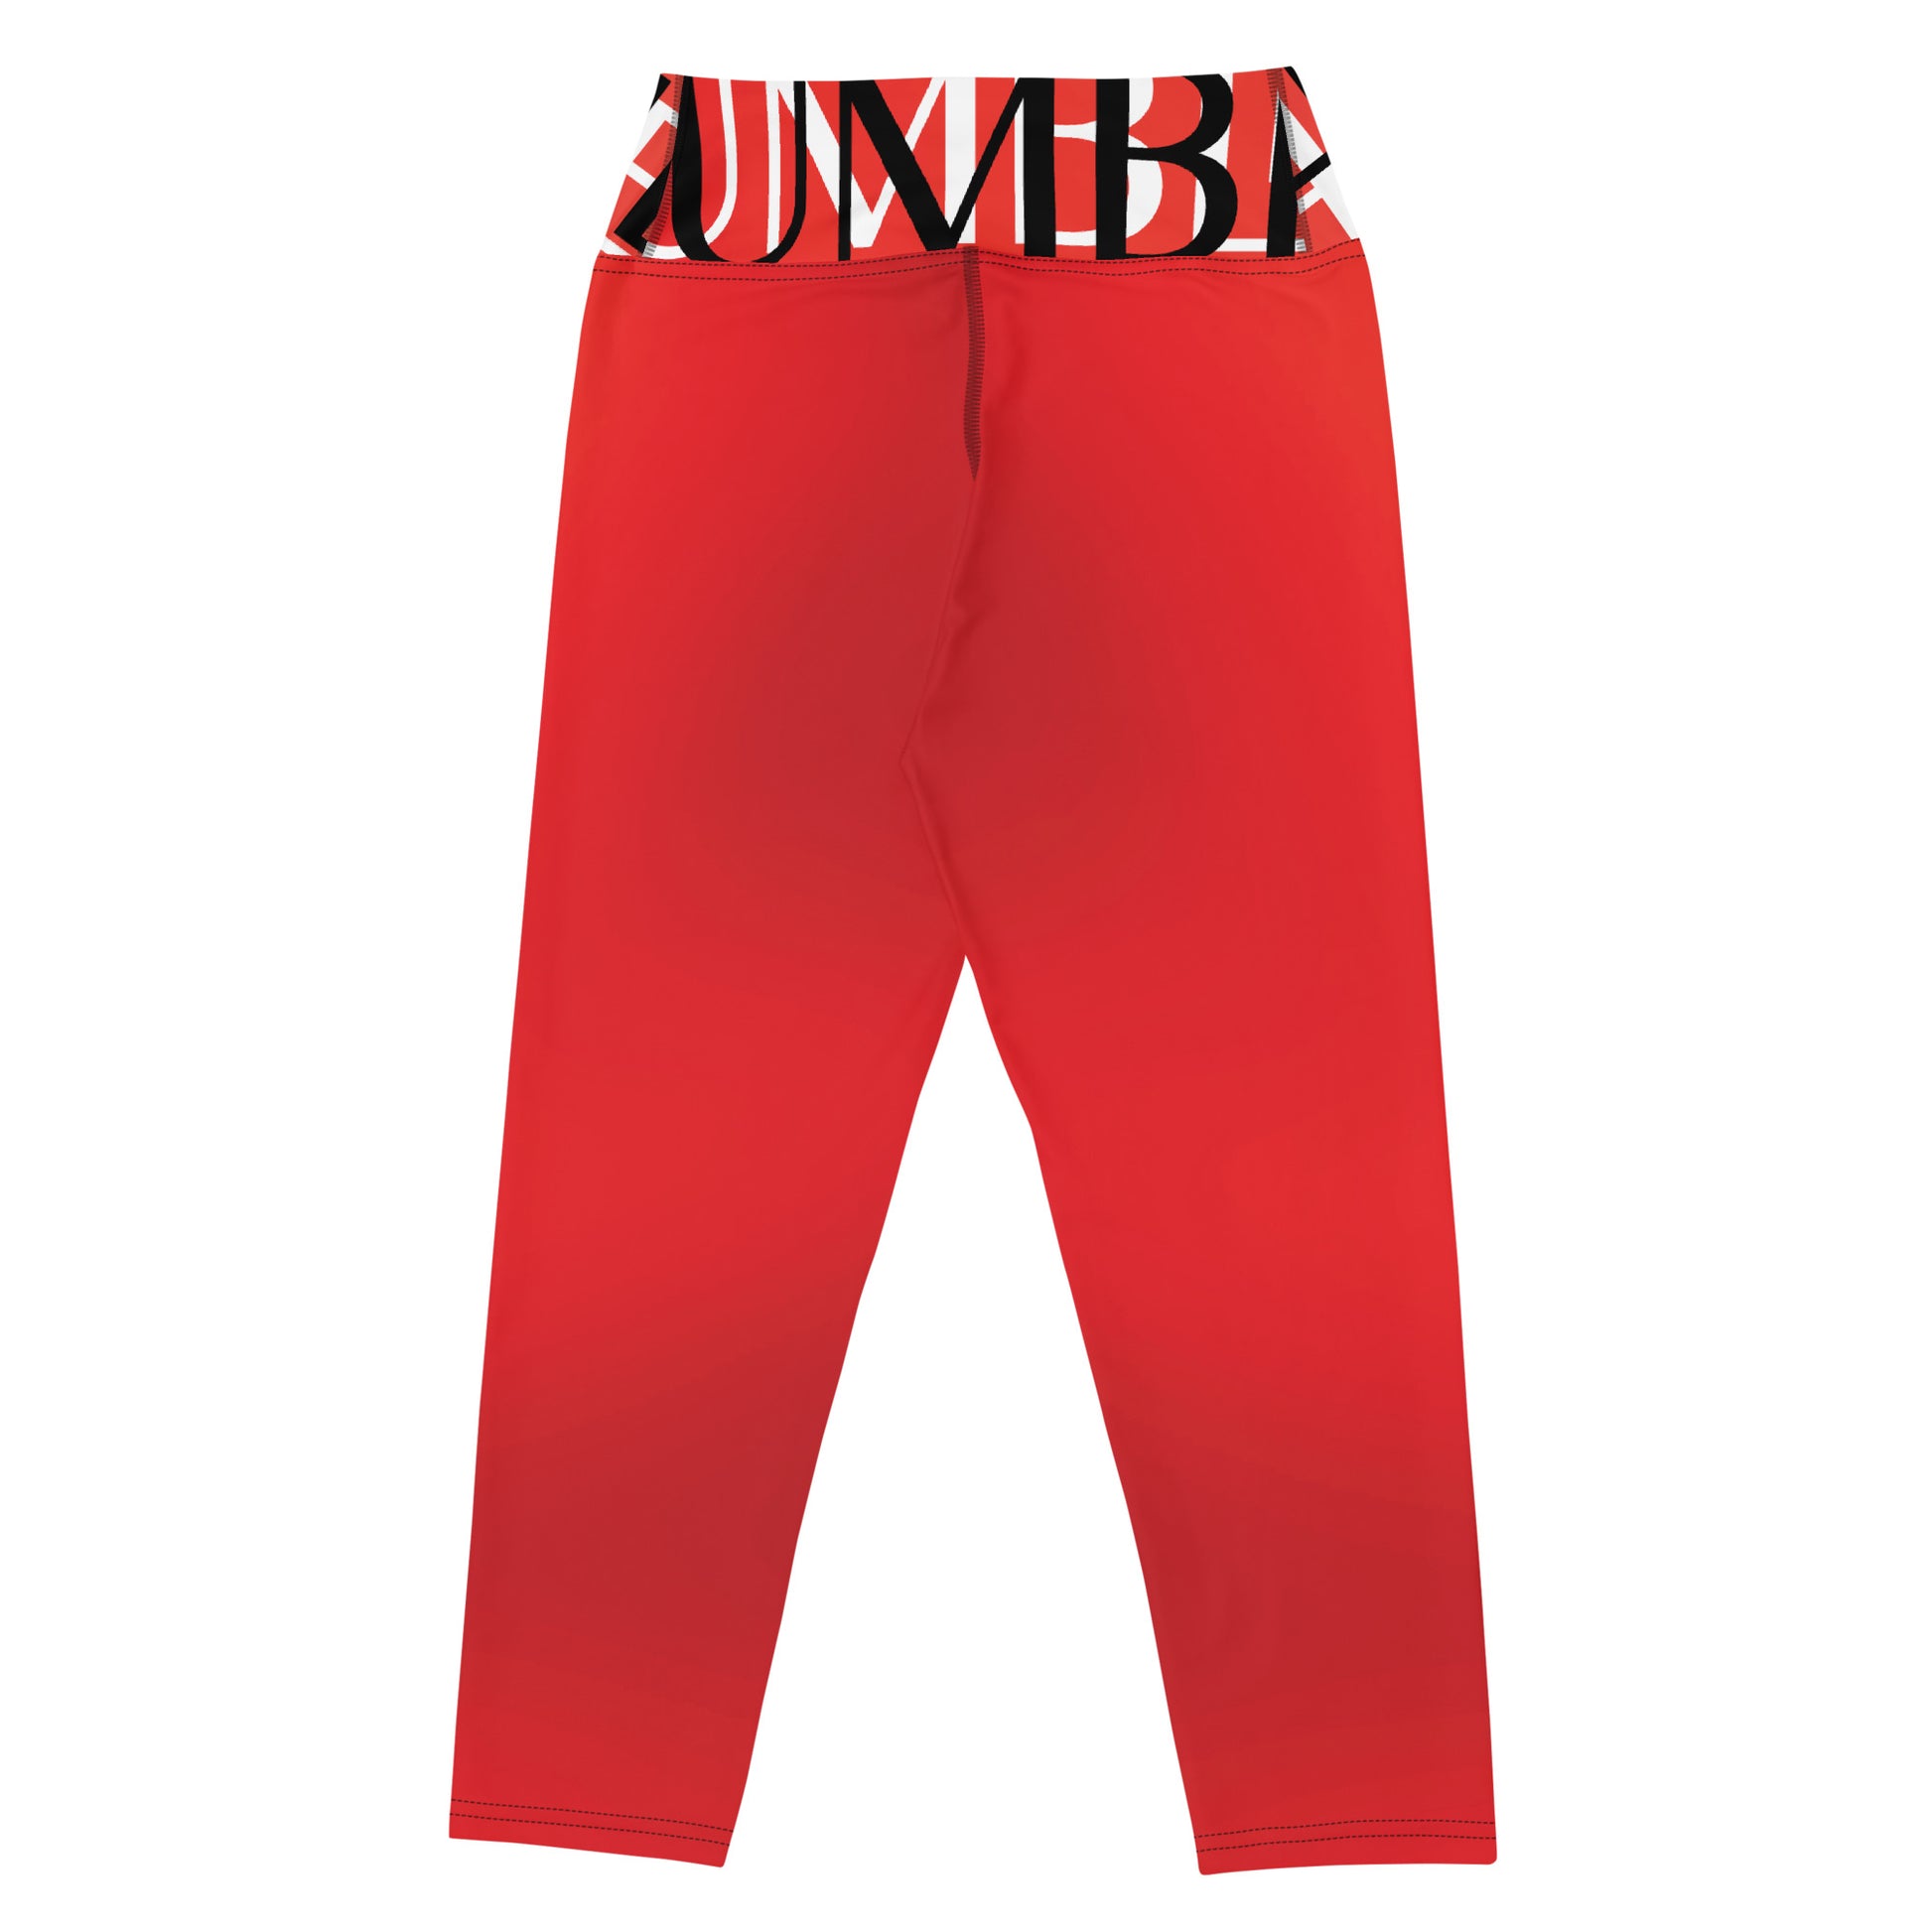 Humble Sportswear™ Women's Cherry Red Capri Leggings - Mireille Fine Art